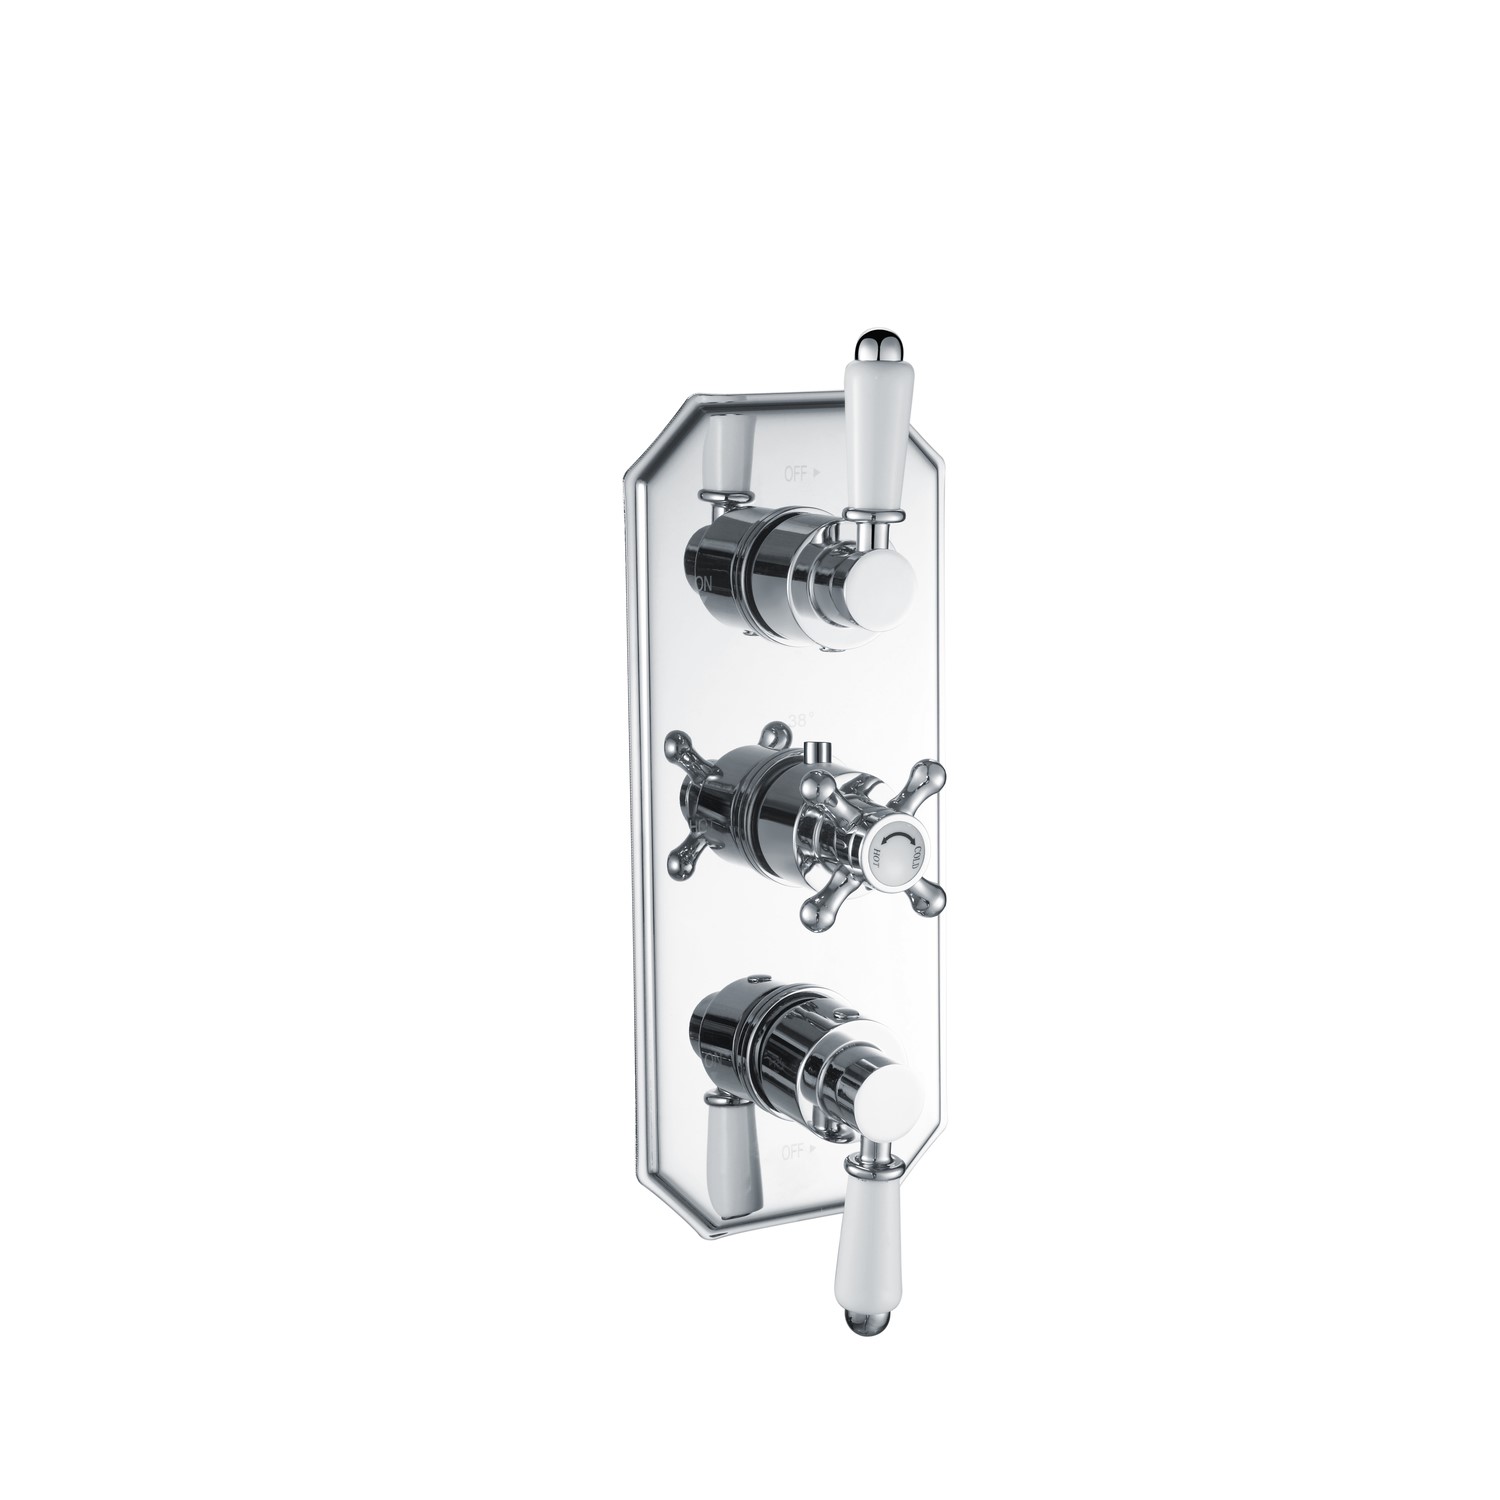 Cambridge traditional triple shower valve - 2 outlets